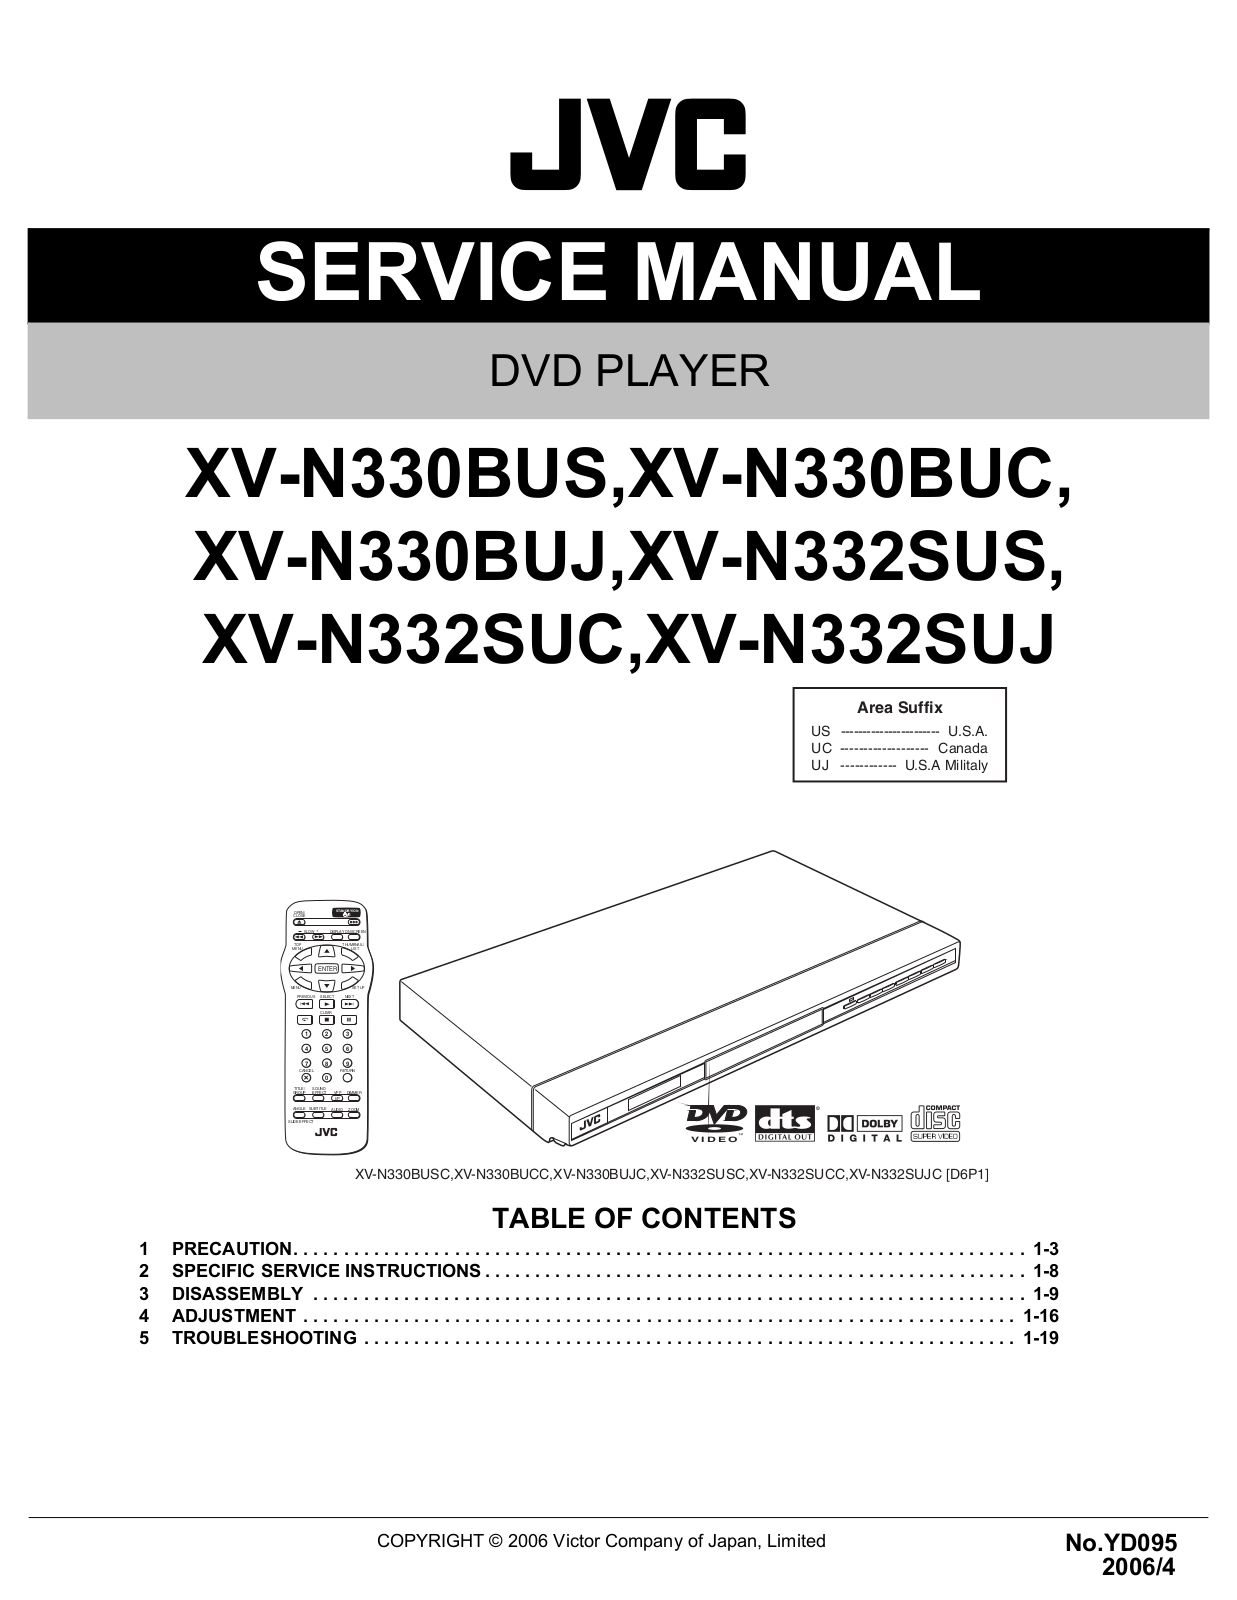 Jvc XV-N332-SUS, XV-N332-SUC, XV-N330-BUS, XV-N330-BUJ, XV-N330-BUC Service Manual